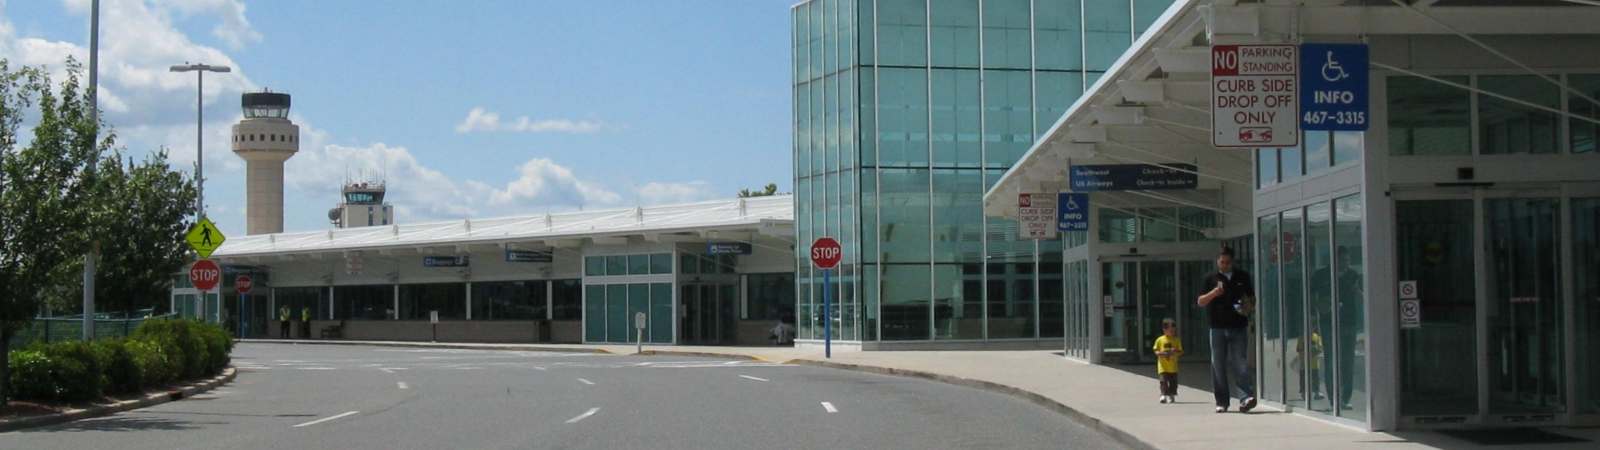 Car Rental Deals at Long Island MacArthur Airport - Rent Now!